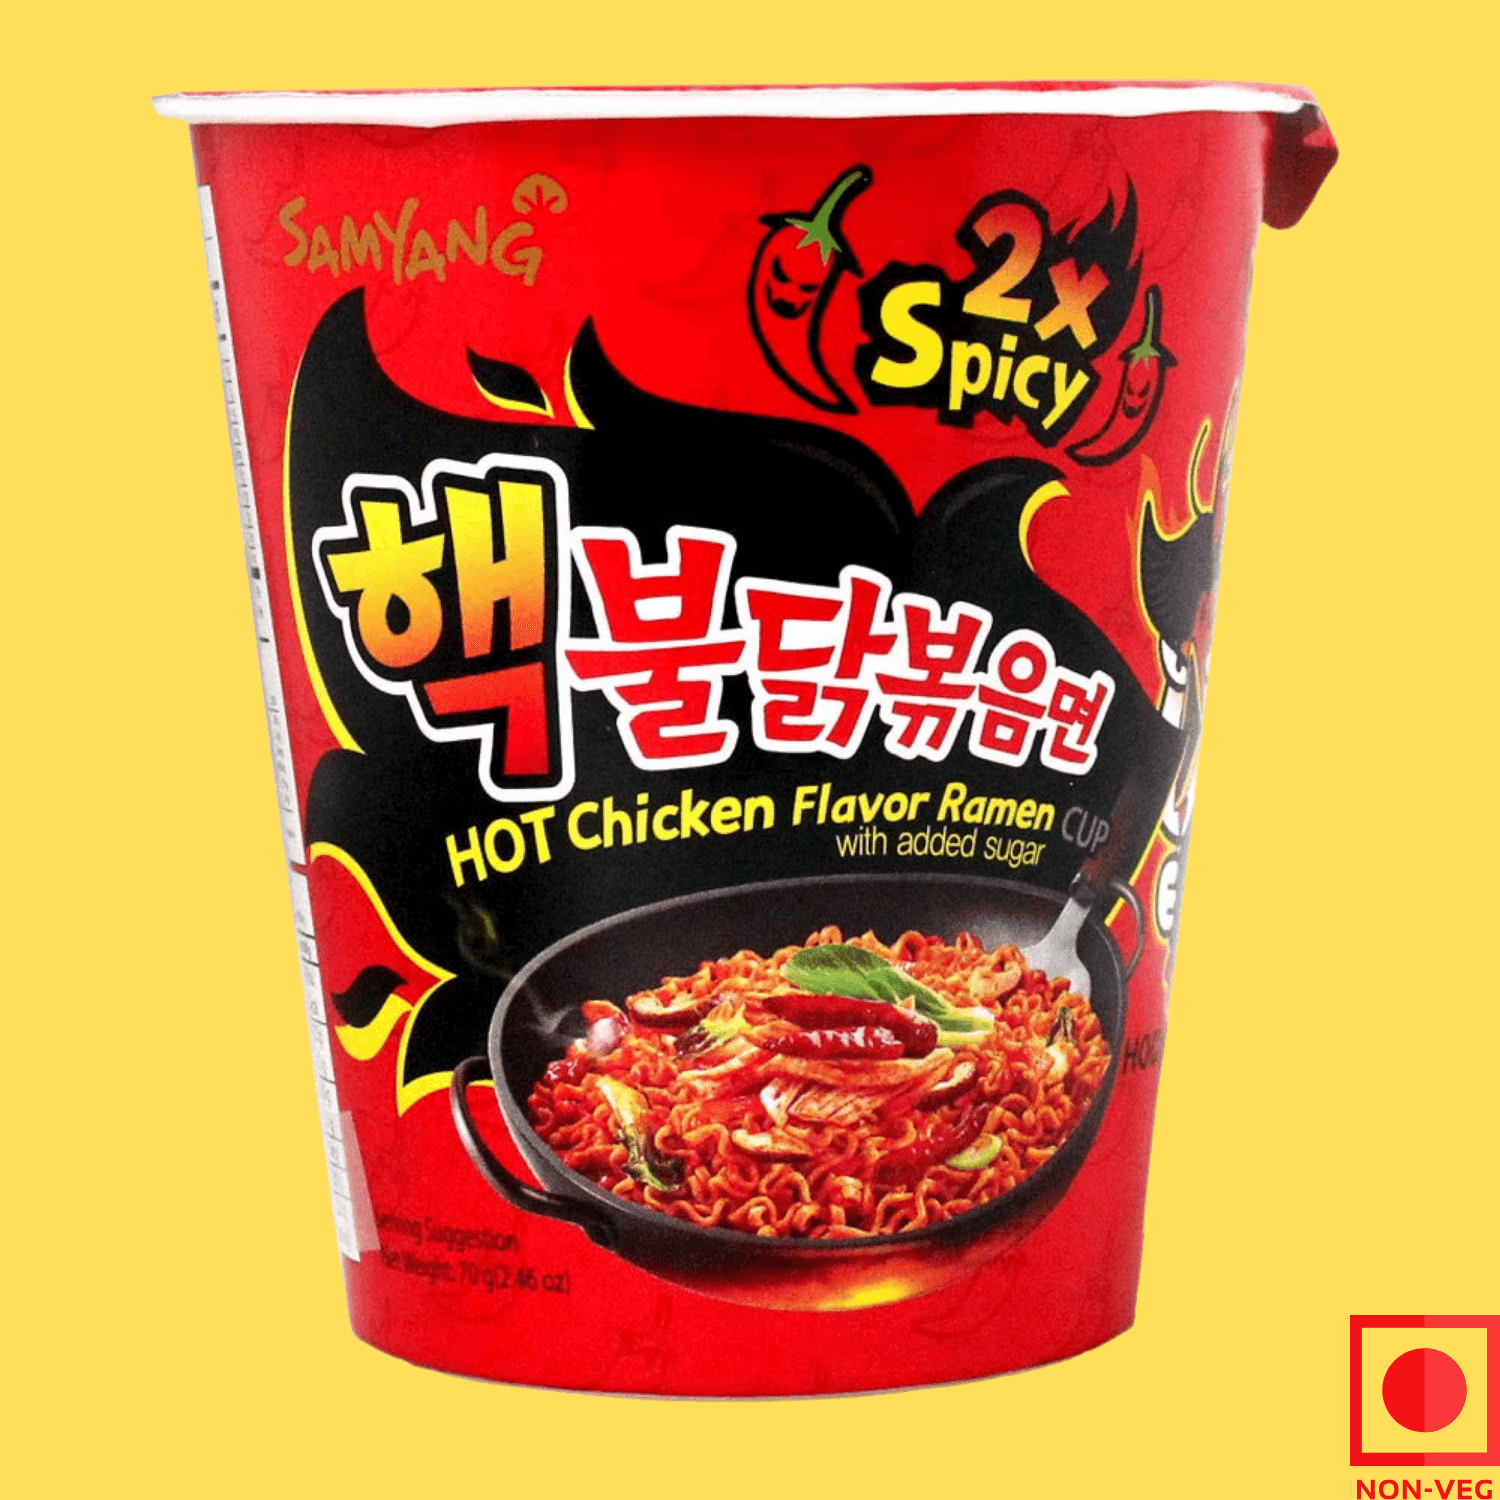 Samyang Hot Chicken Ramen 2x Spicy Cup, 70g (Imported) - Super 7 Mart